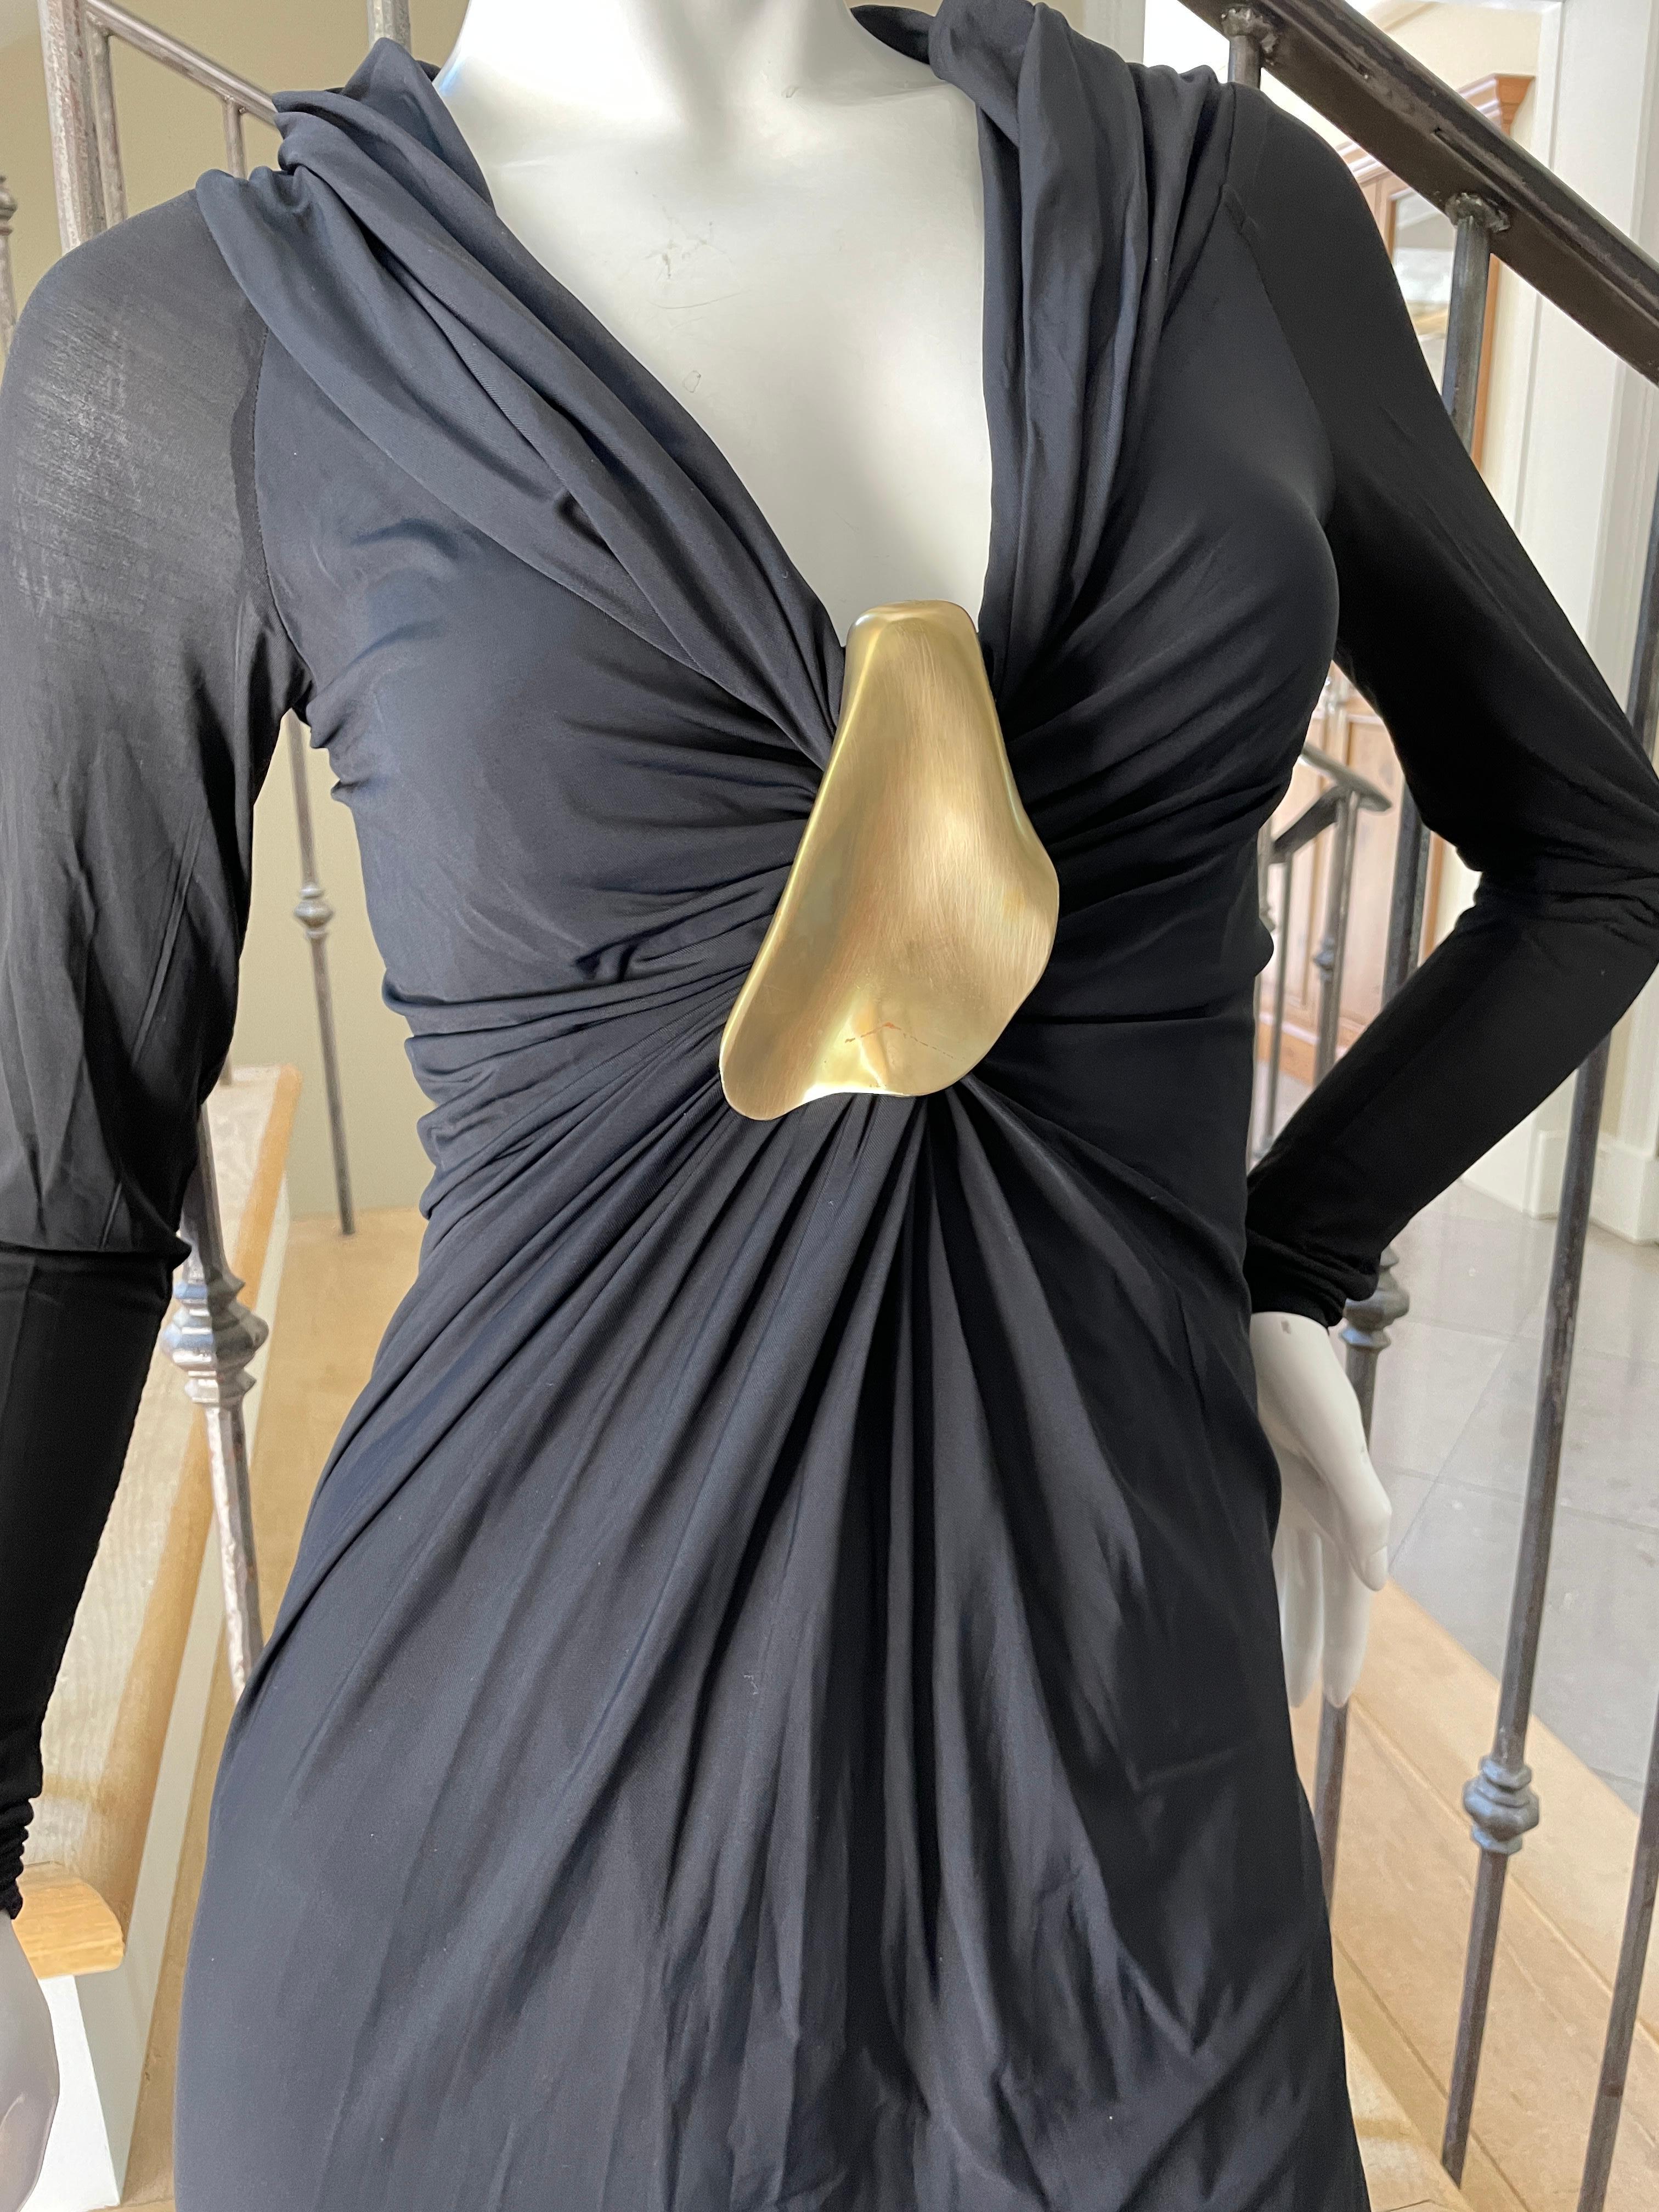 Donna Karan Vintage Black Dress w Plunging Neckline & Robert Lee Morris Ornament In Good Condition For Sale In Cloverdale, CA